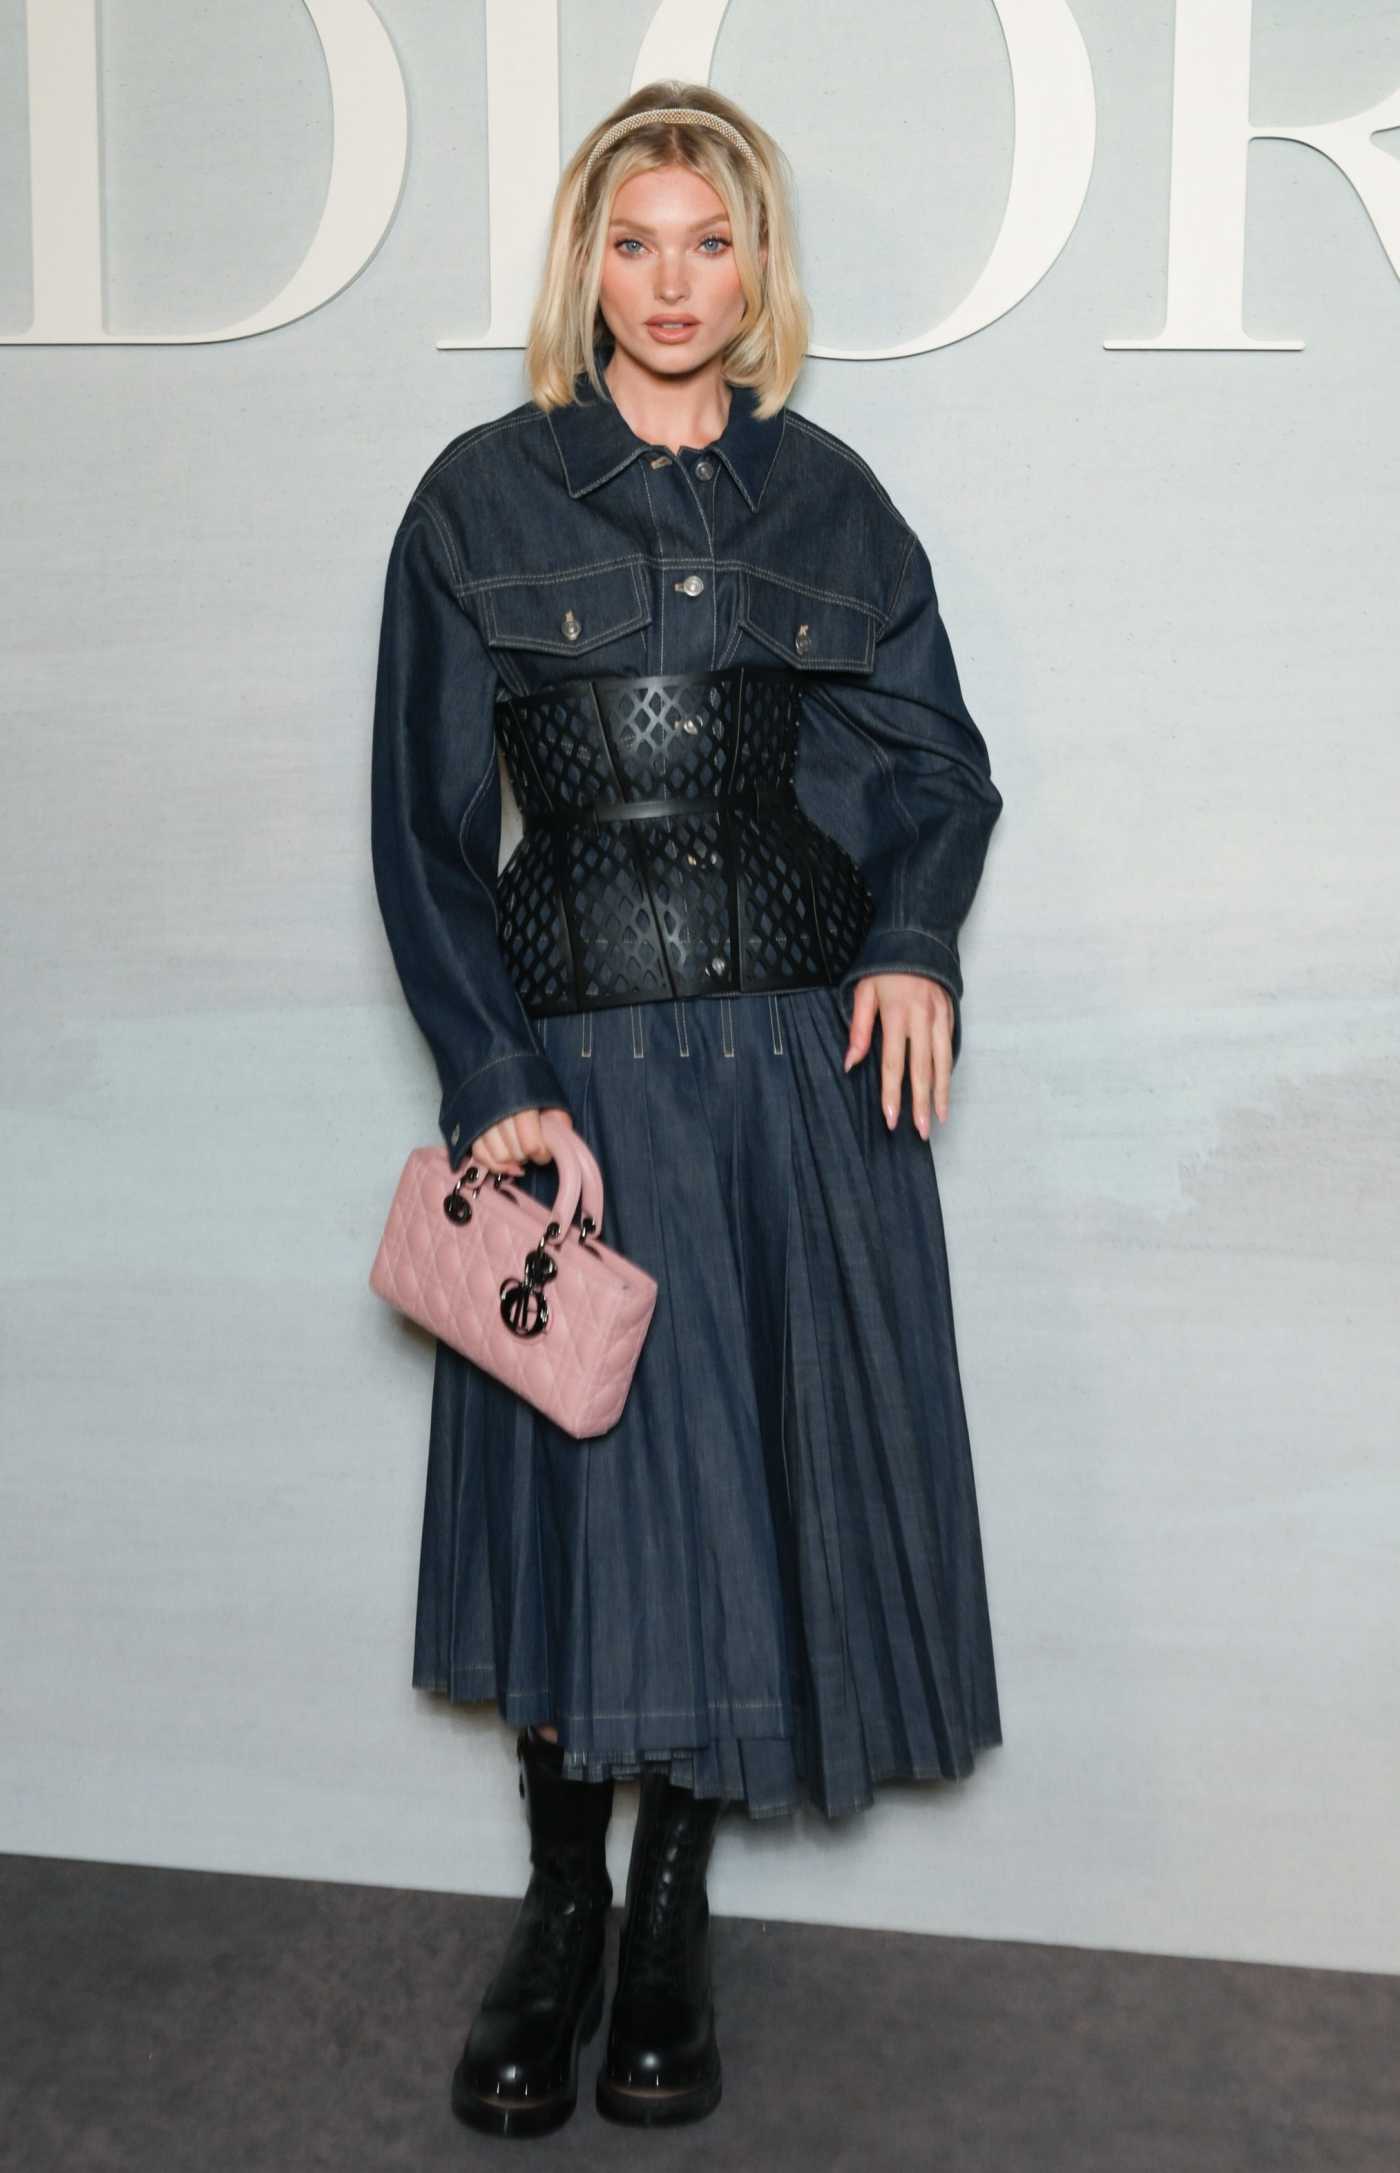 Elsa Hosk Attends the Christian Dior Fashion Show During 2022 Paris Fashion Week in Paris 09/27/2022